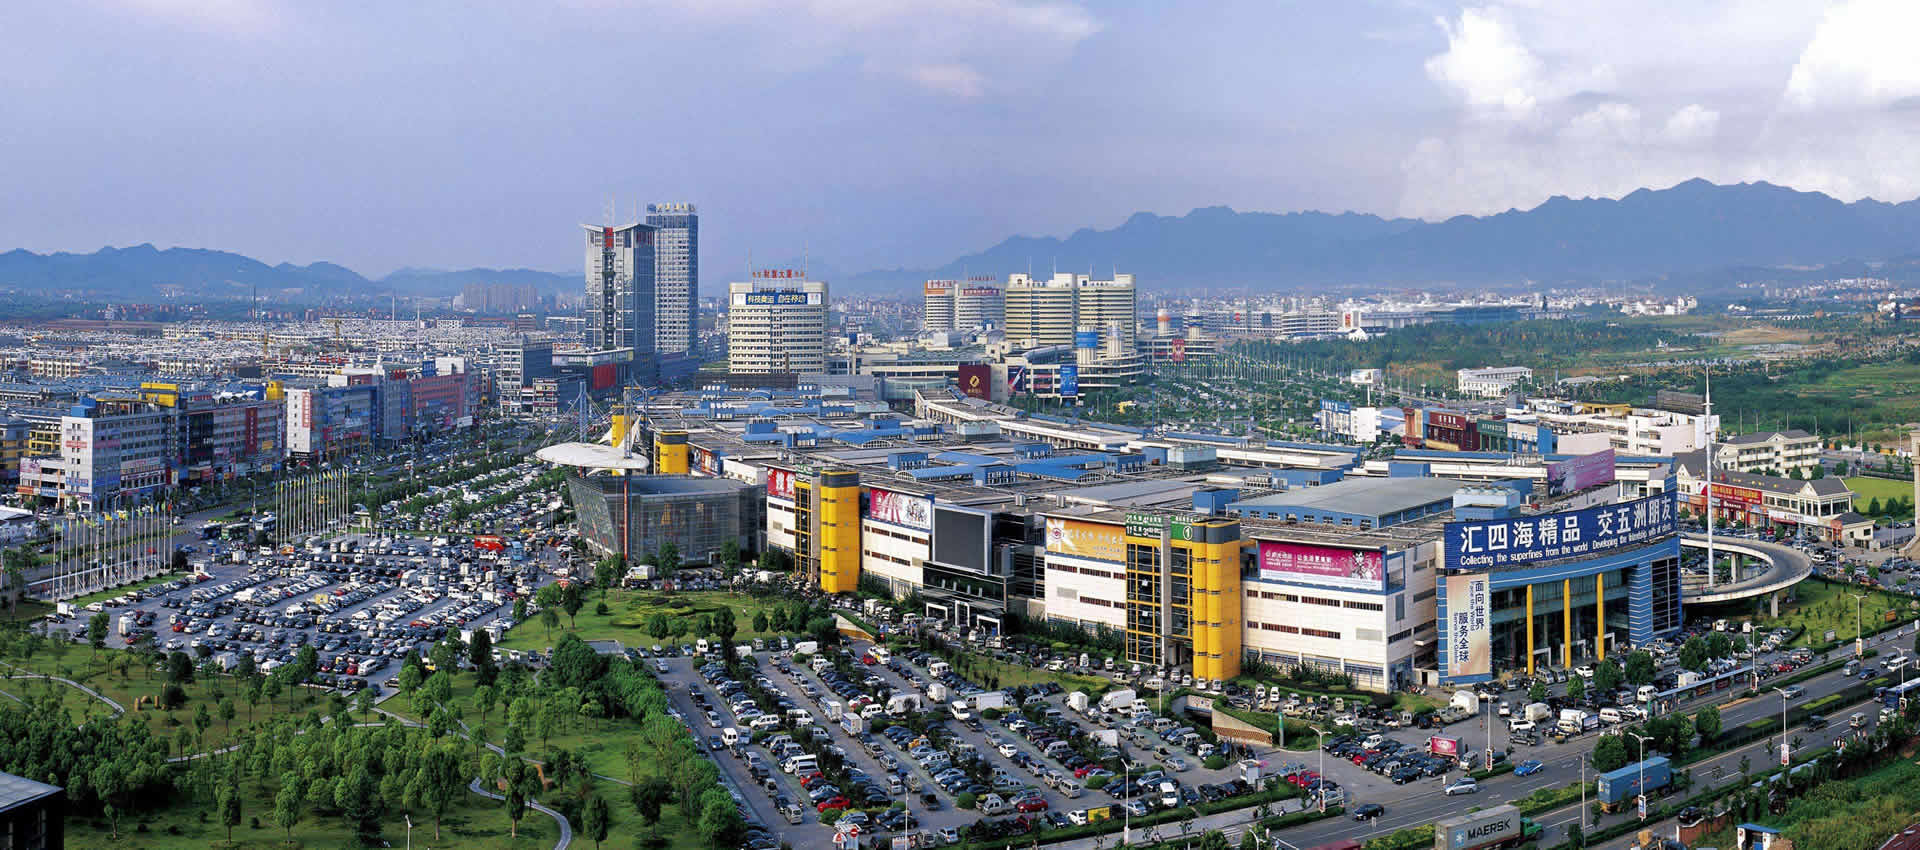 Yiwu International Trade City was established in 1982